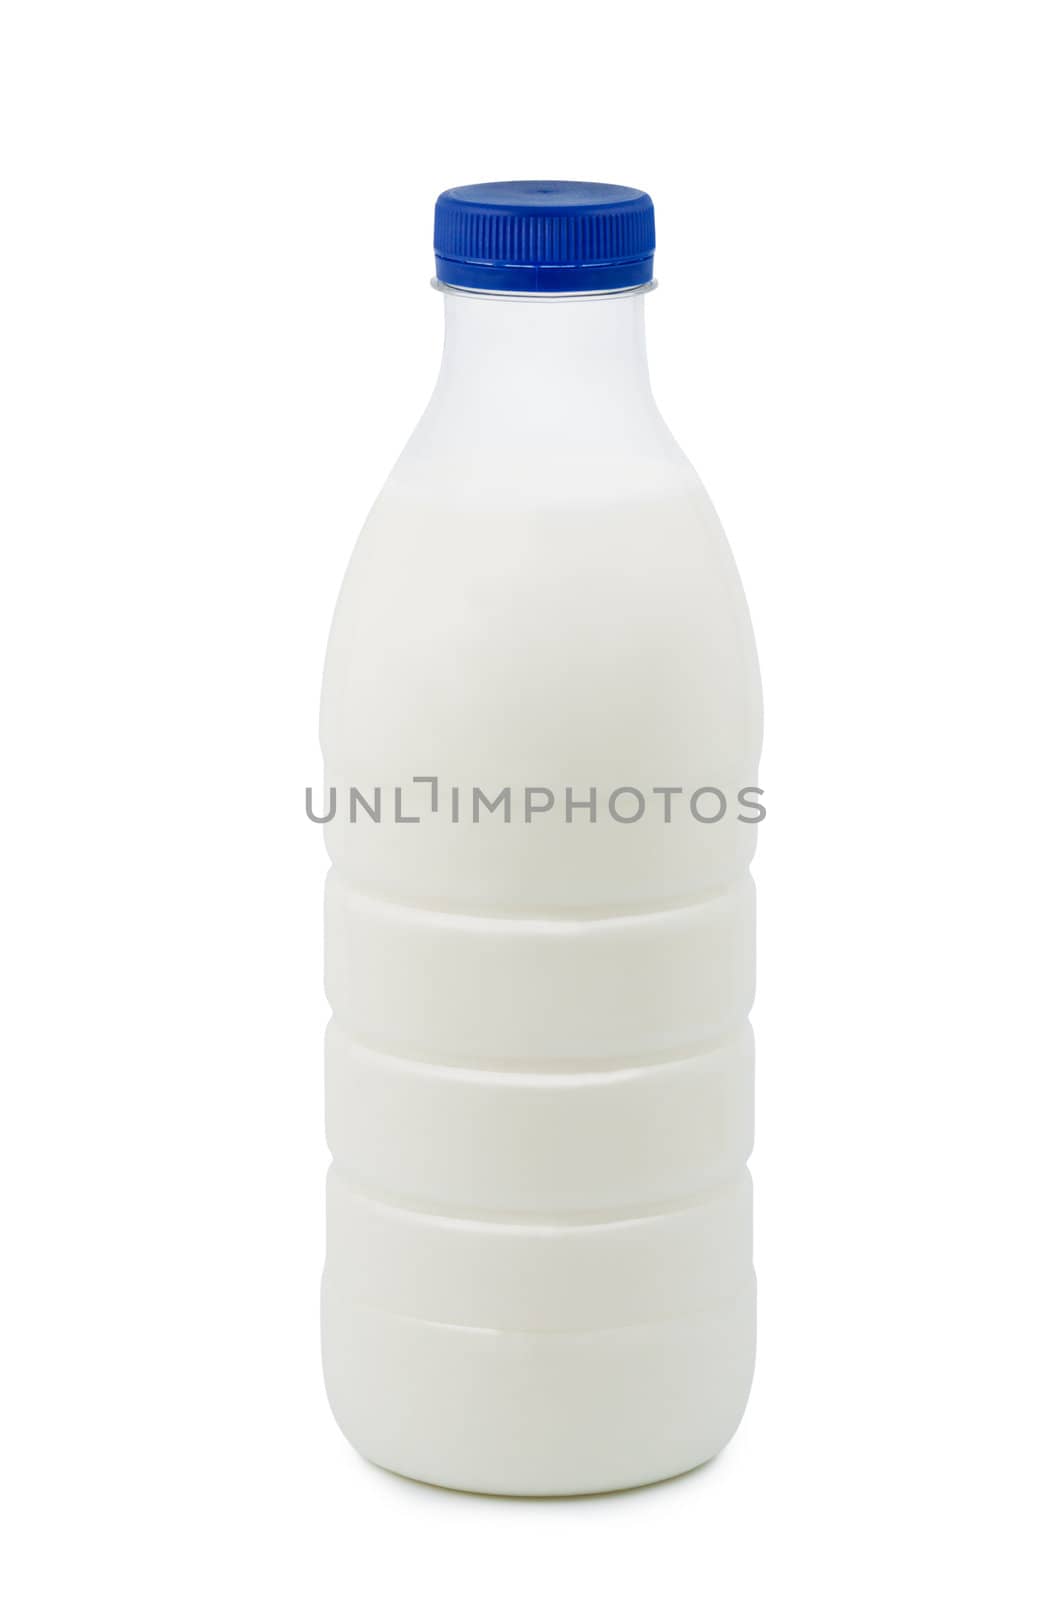 Plastic bottle of milk isolated on white background.